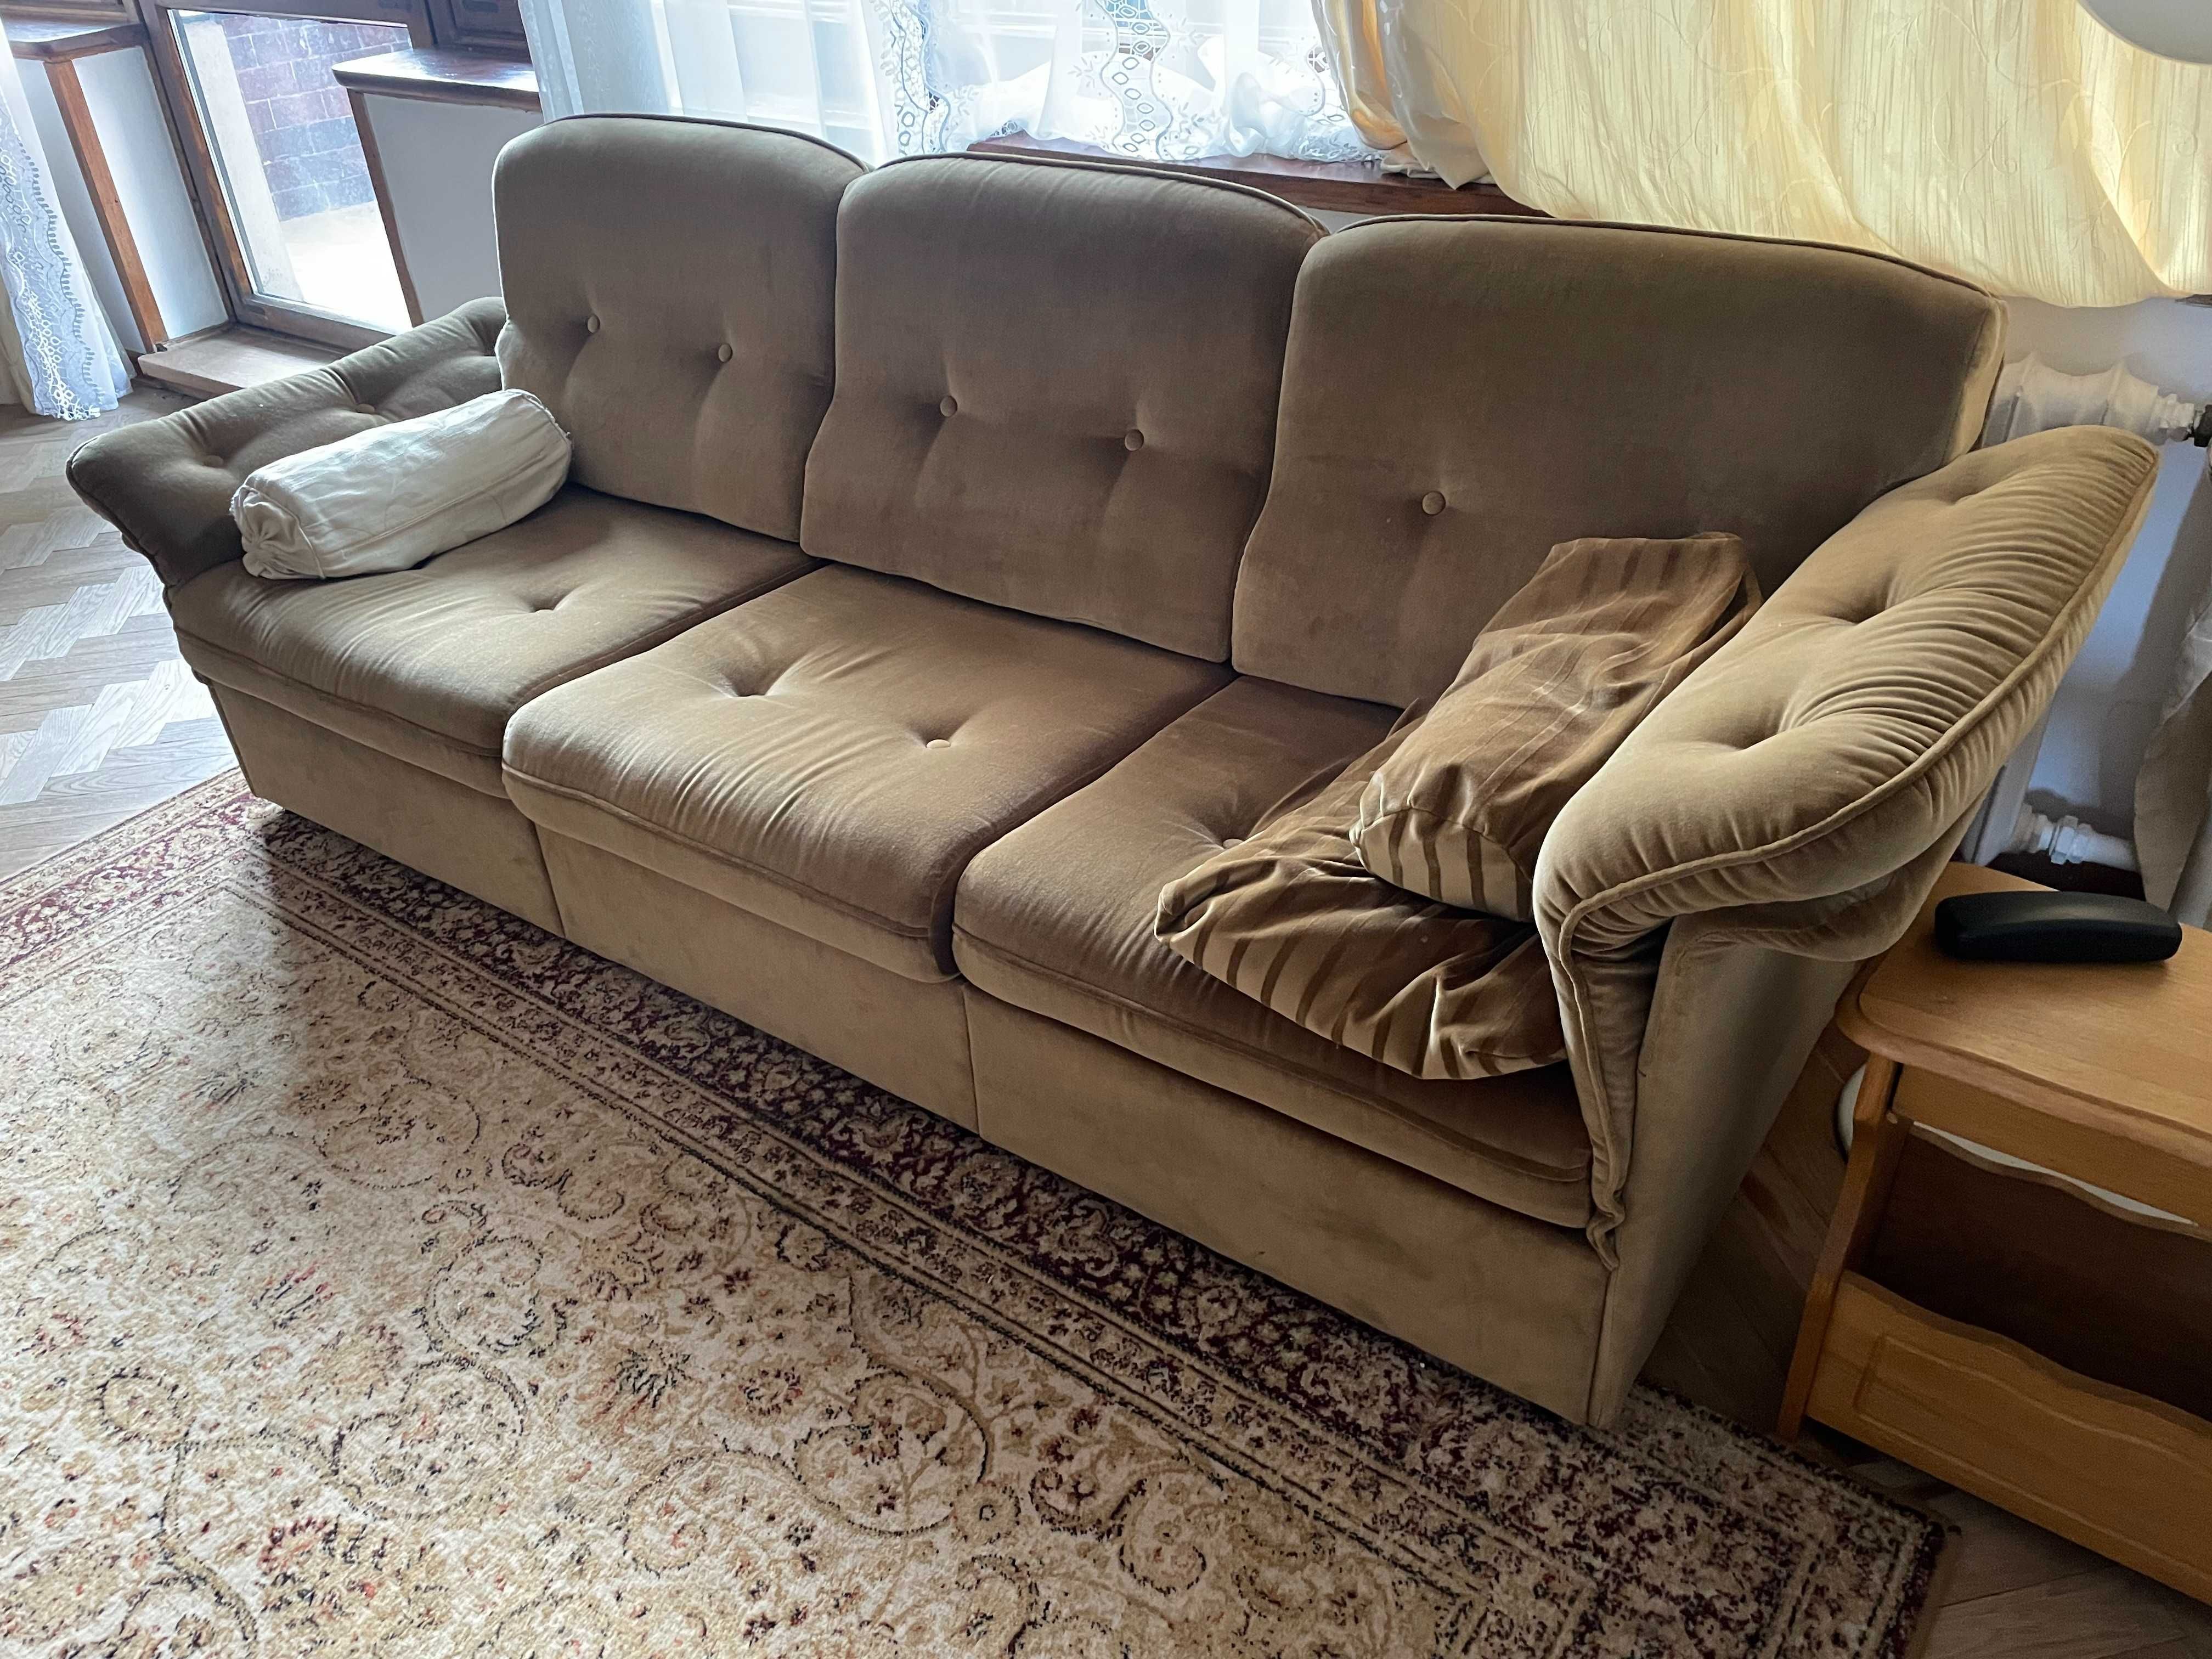 Sofa i dwa fotele: retro, vintage